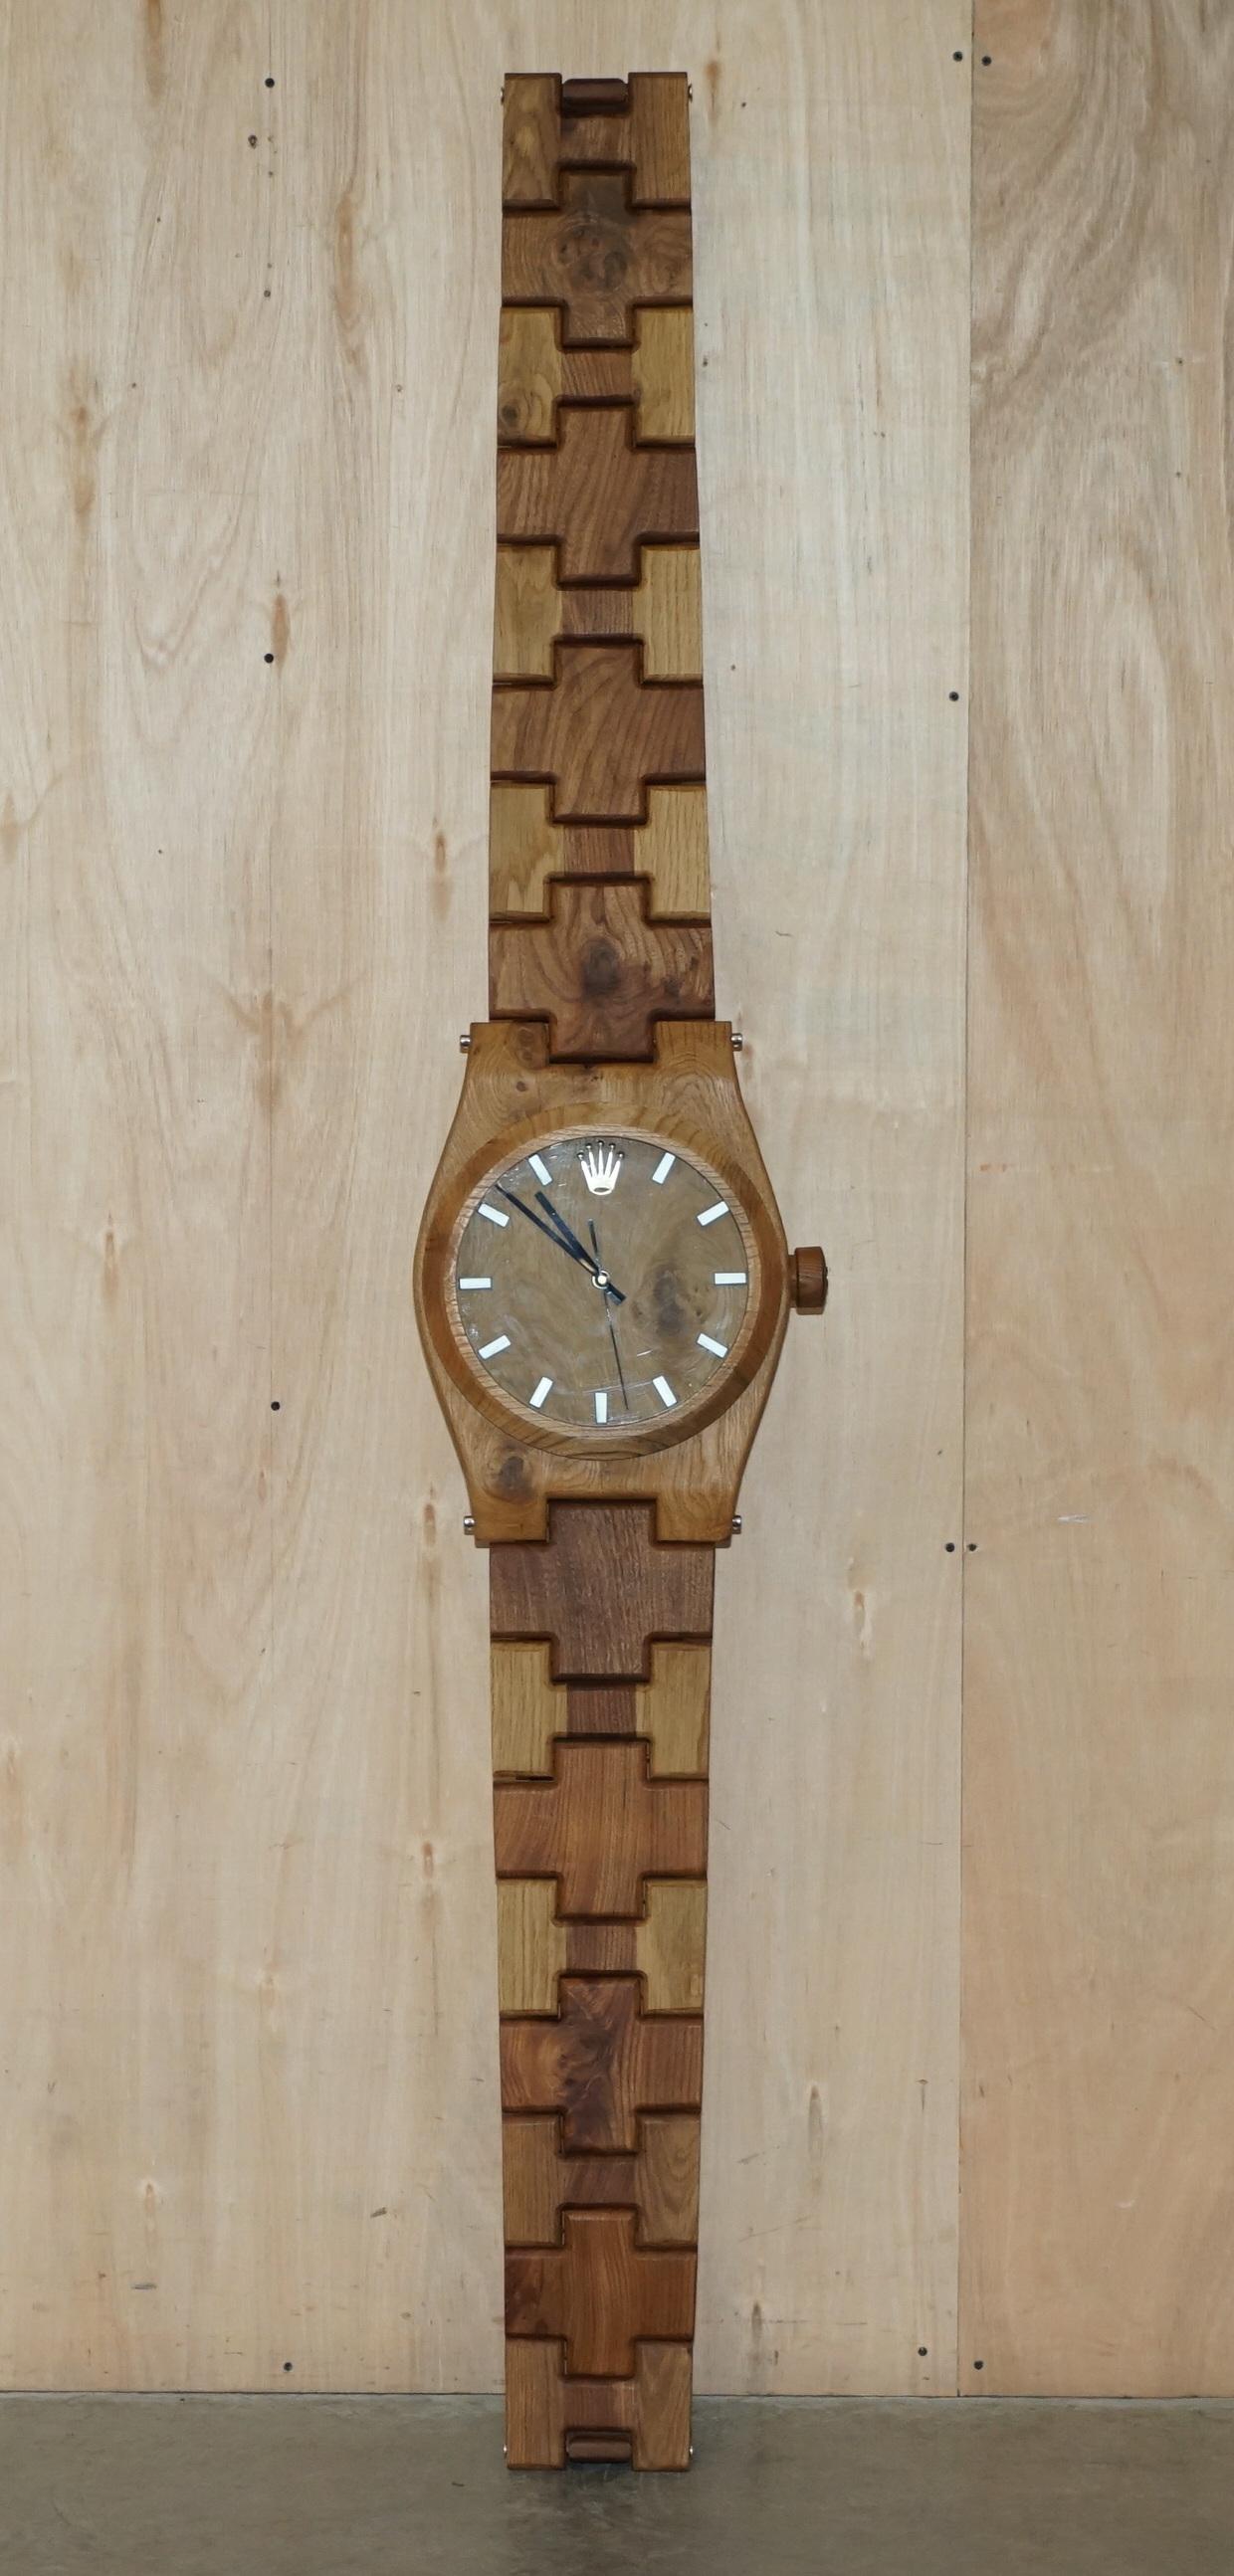 wrist watch wall clock